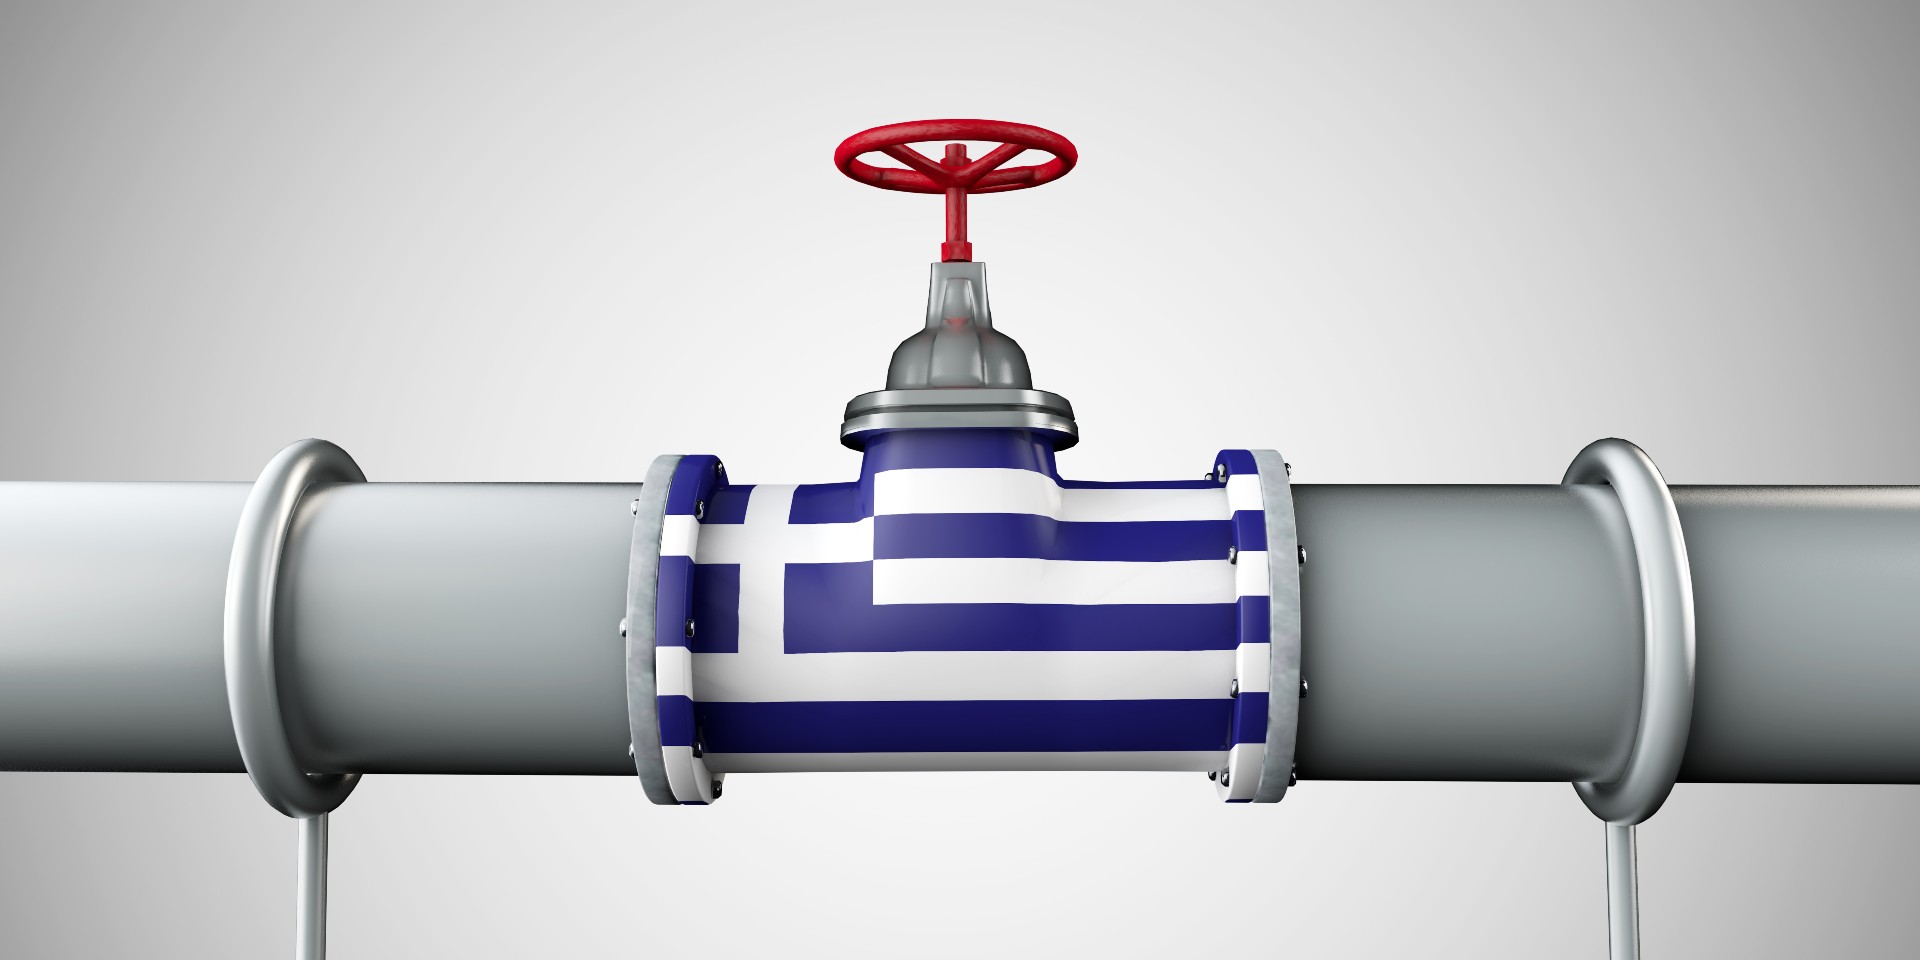 221123155701_greece-oil-gas-fuel-pipeline-oil-industry-concept-d-rendering